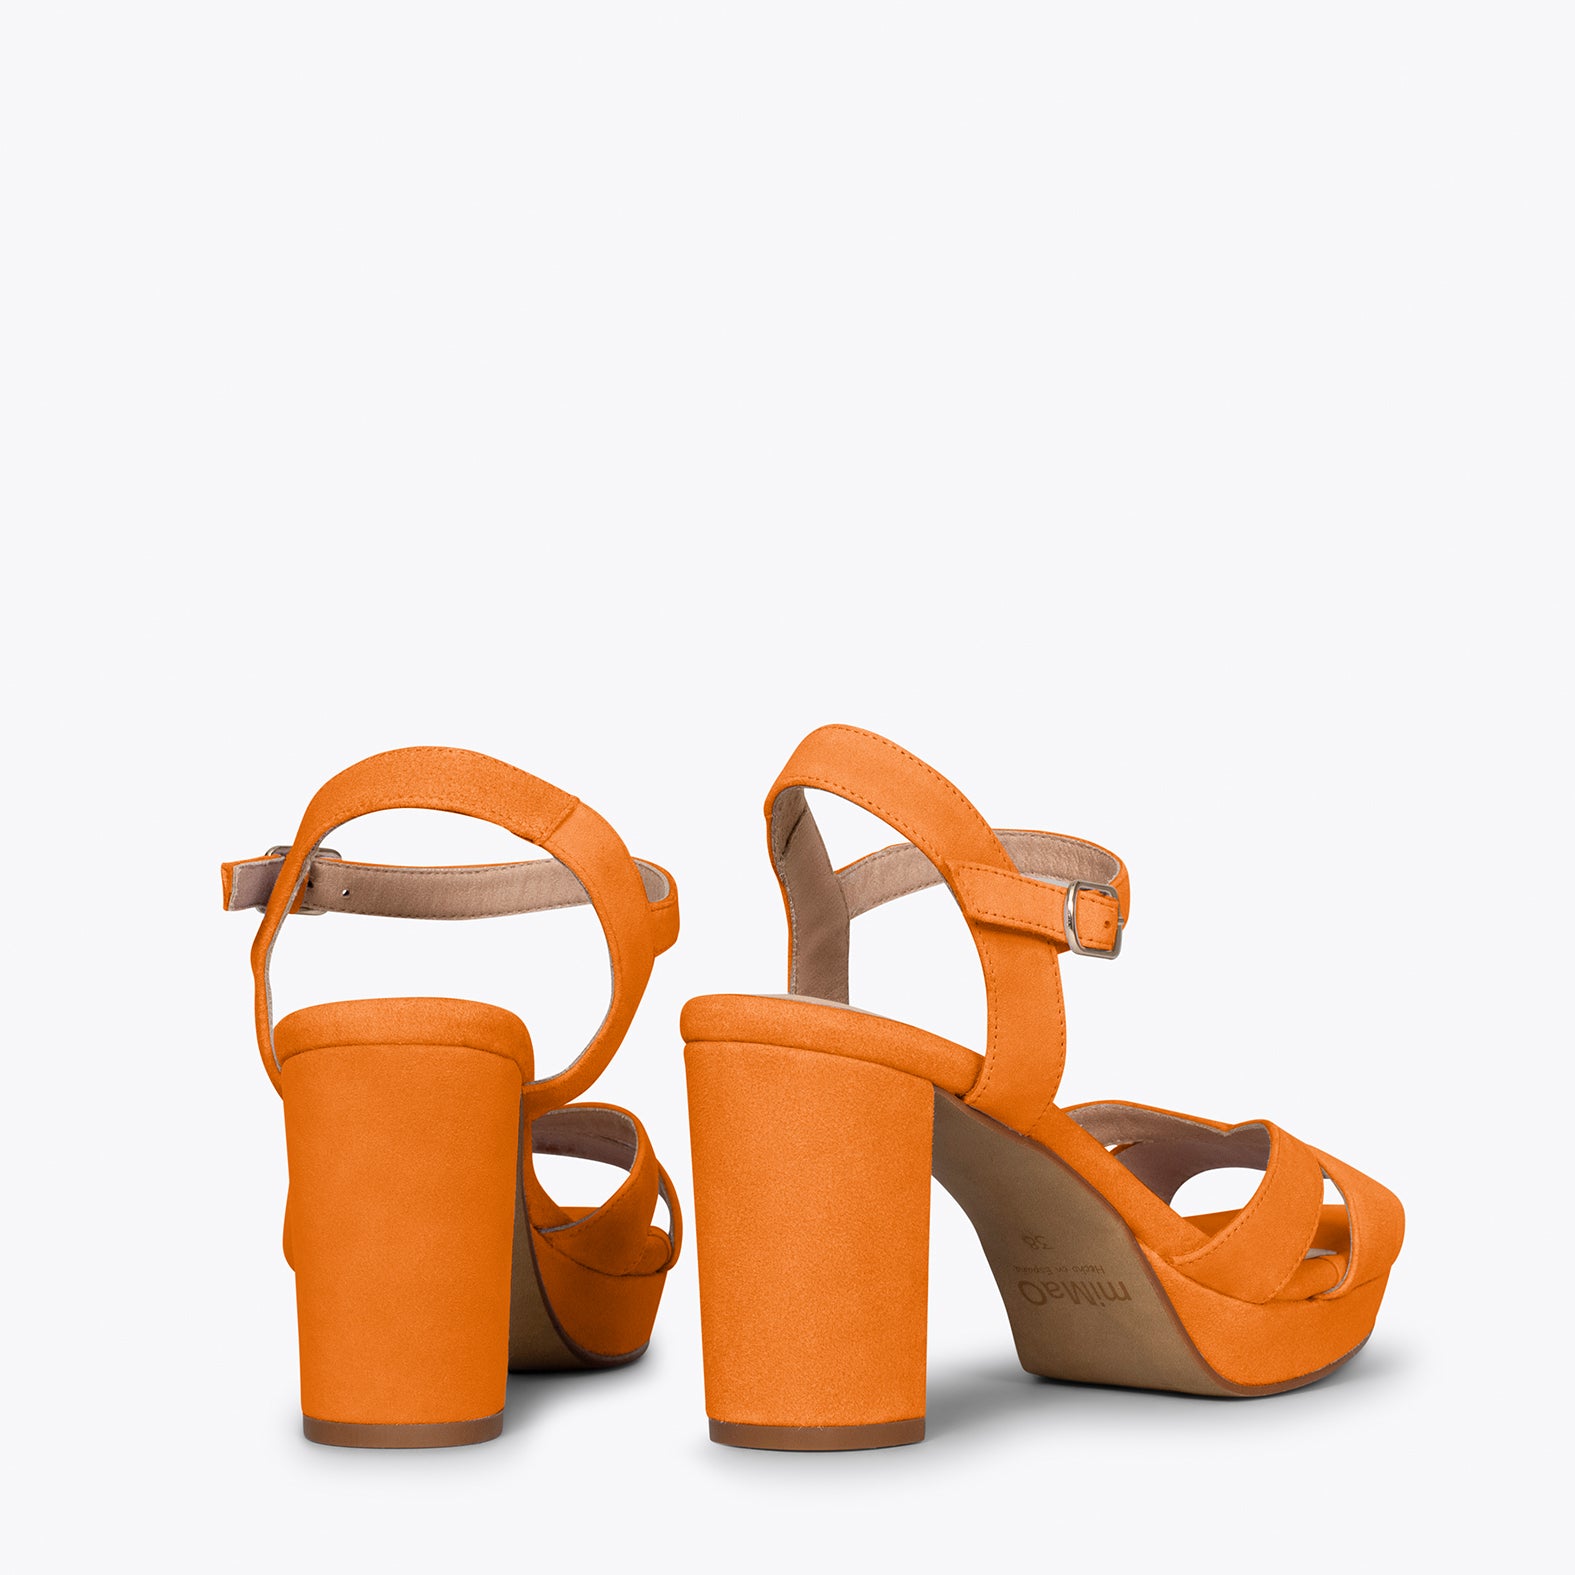 PARIS – ORANGE high heel sandal with platform